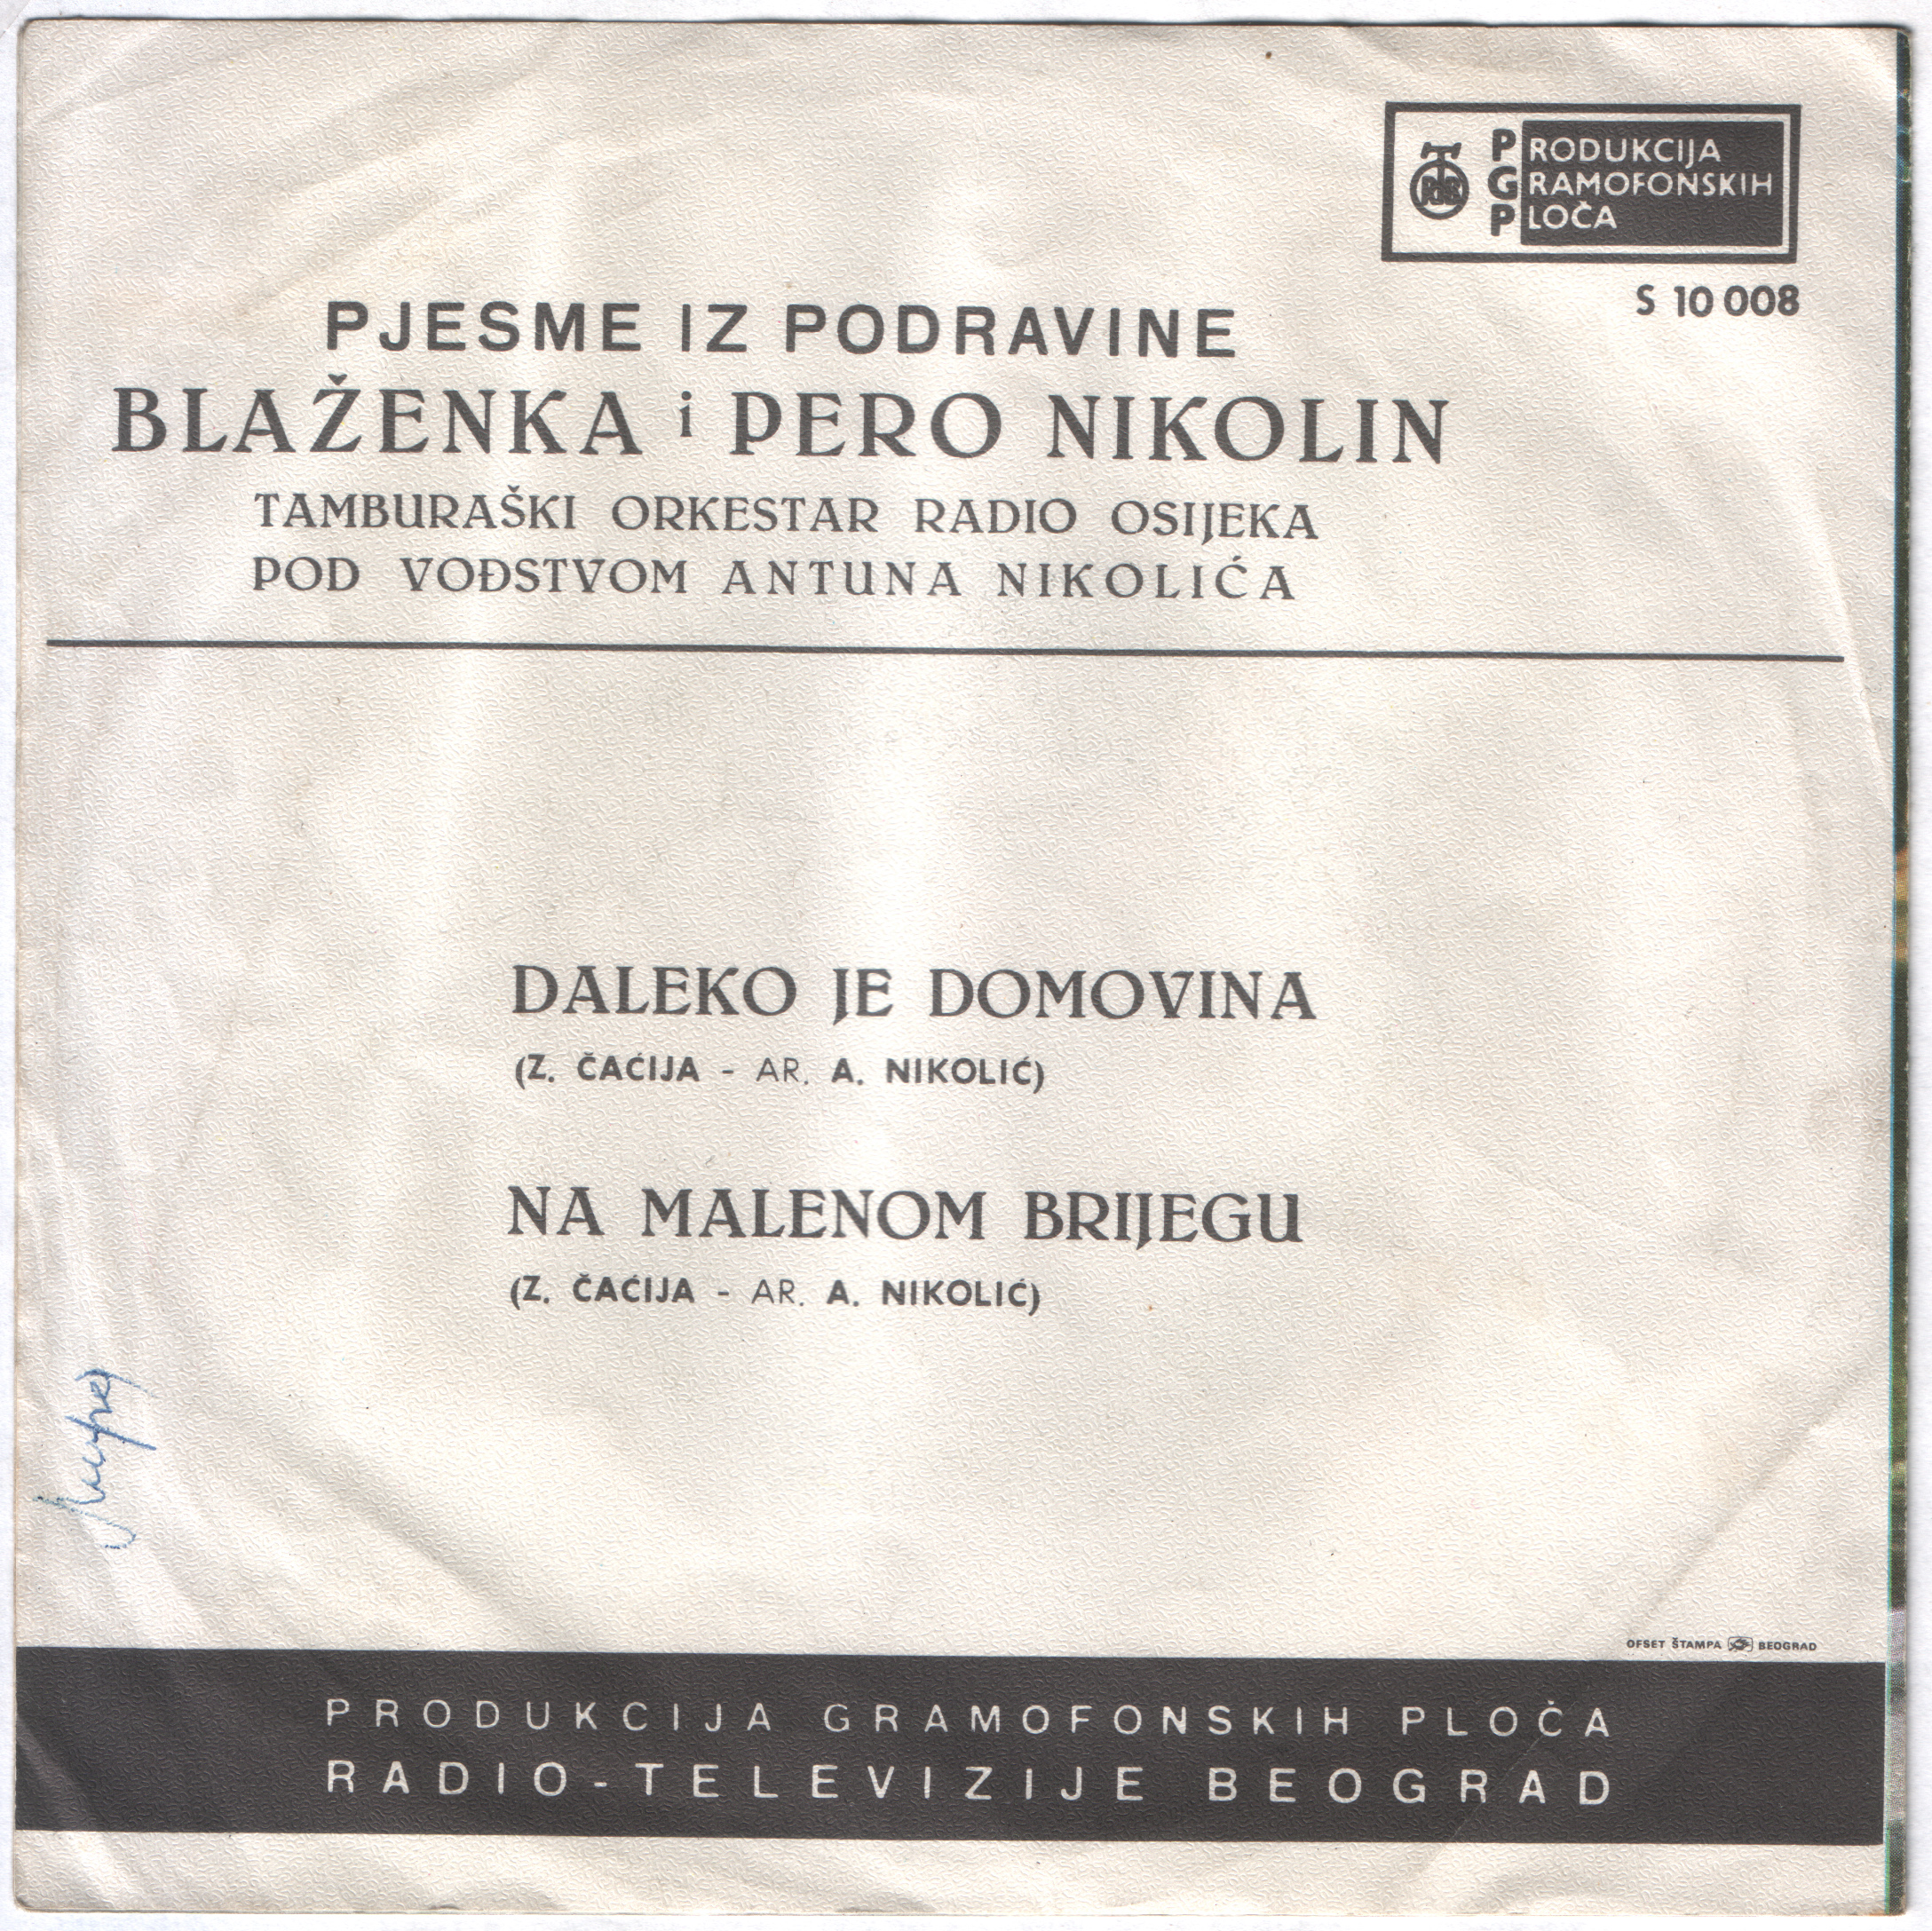 Duet Blazenka i Pero Nikolin 1970 Z